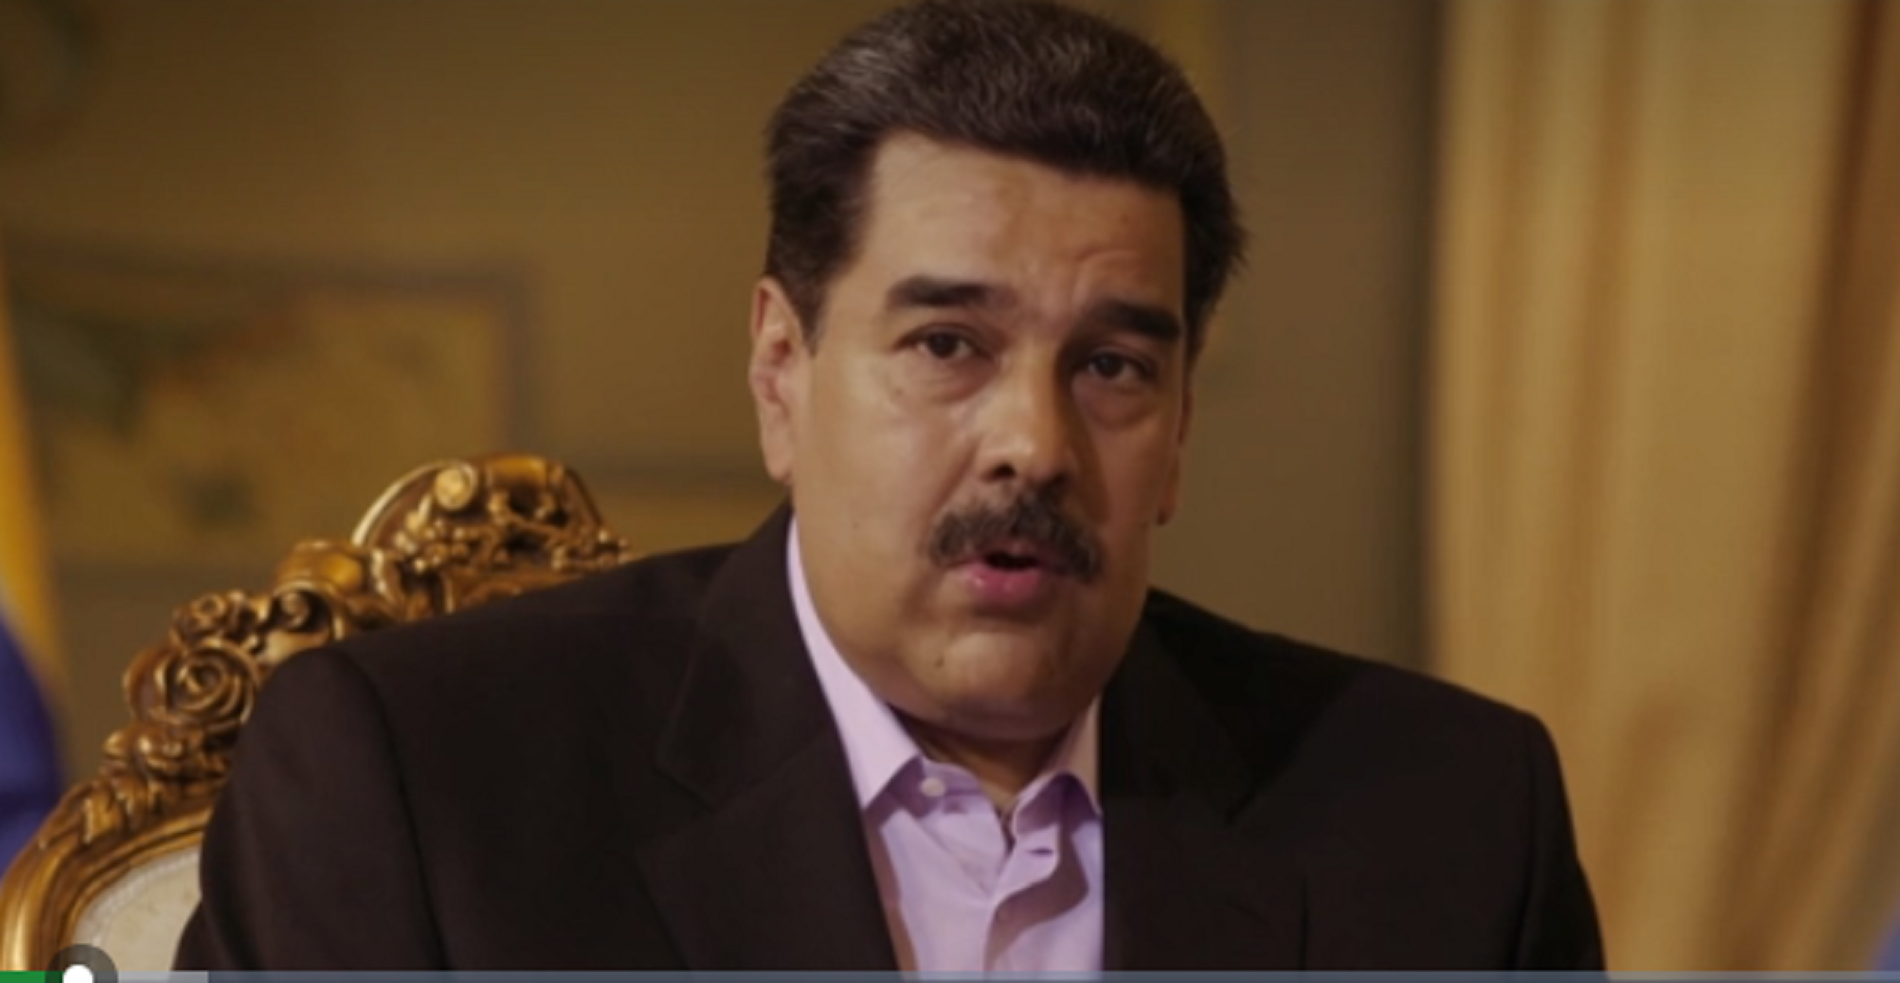 Maduro: "Imagine if I gave the EU seven days to recognize the Catalan Republic"